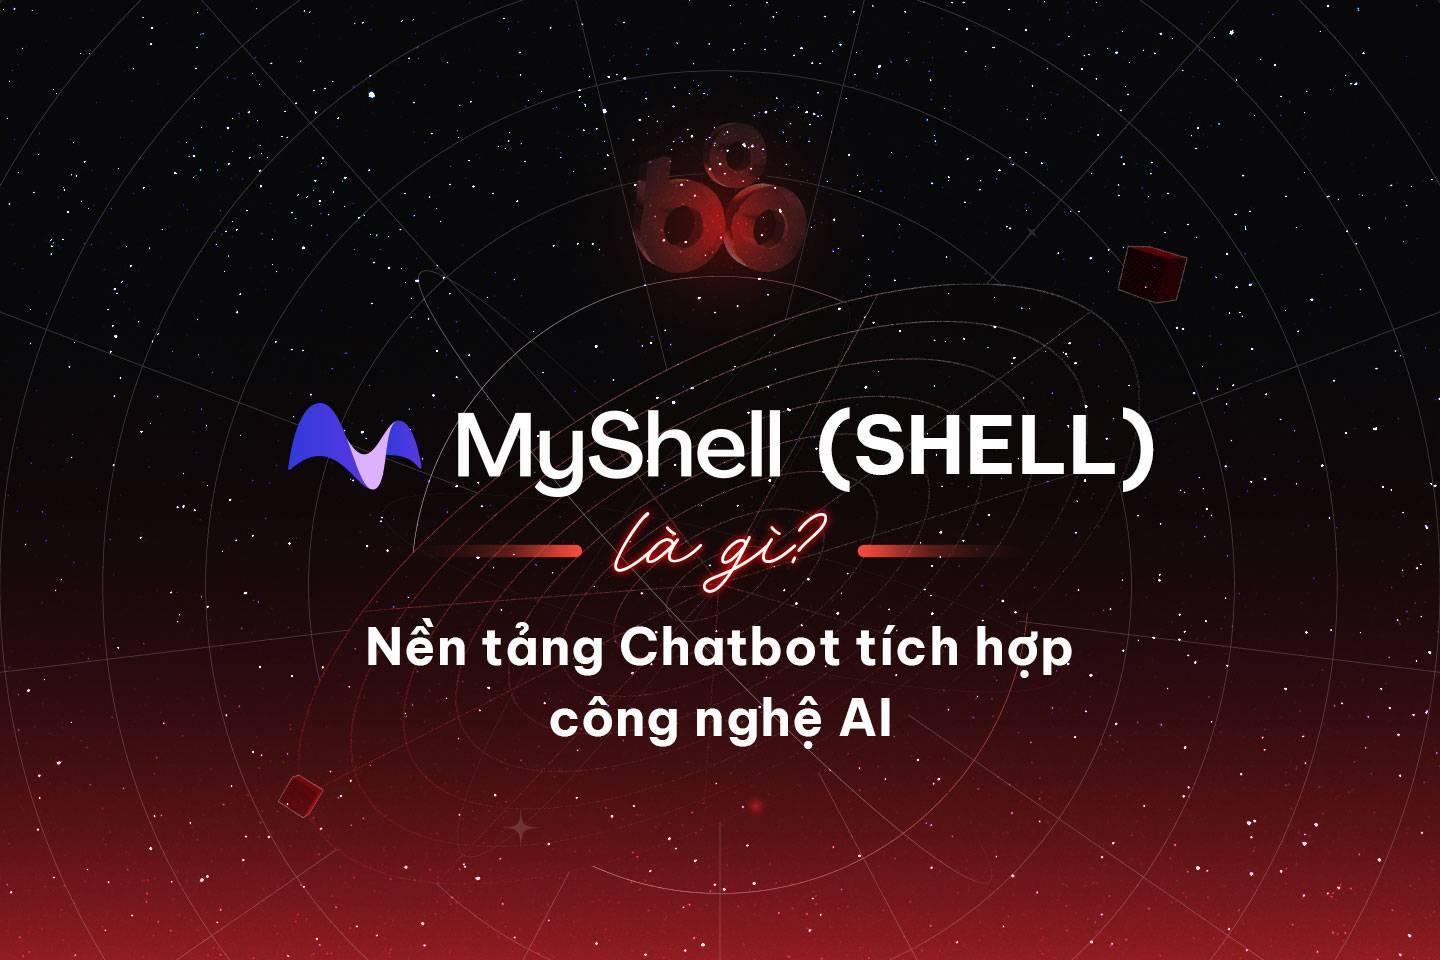 myshell-shell-la-gi-nen-tang-chatbot-tich-hop-cong-nghe-ai